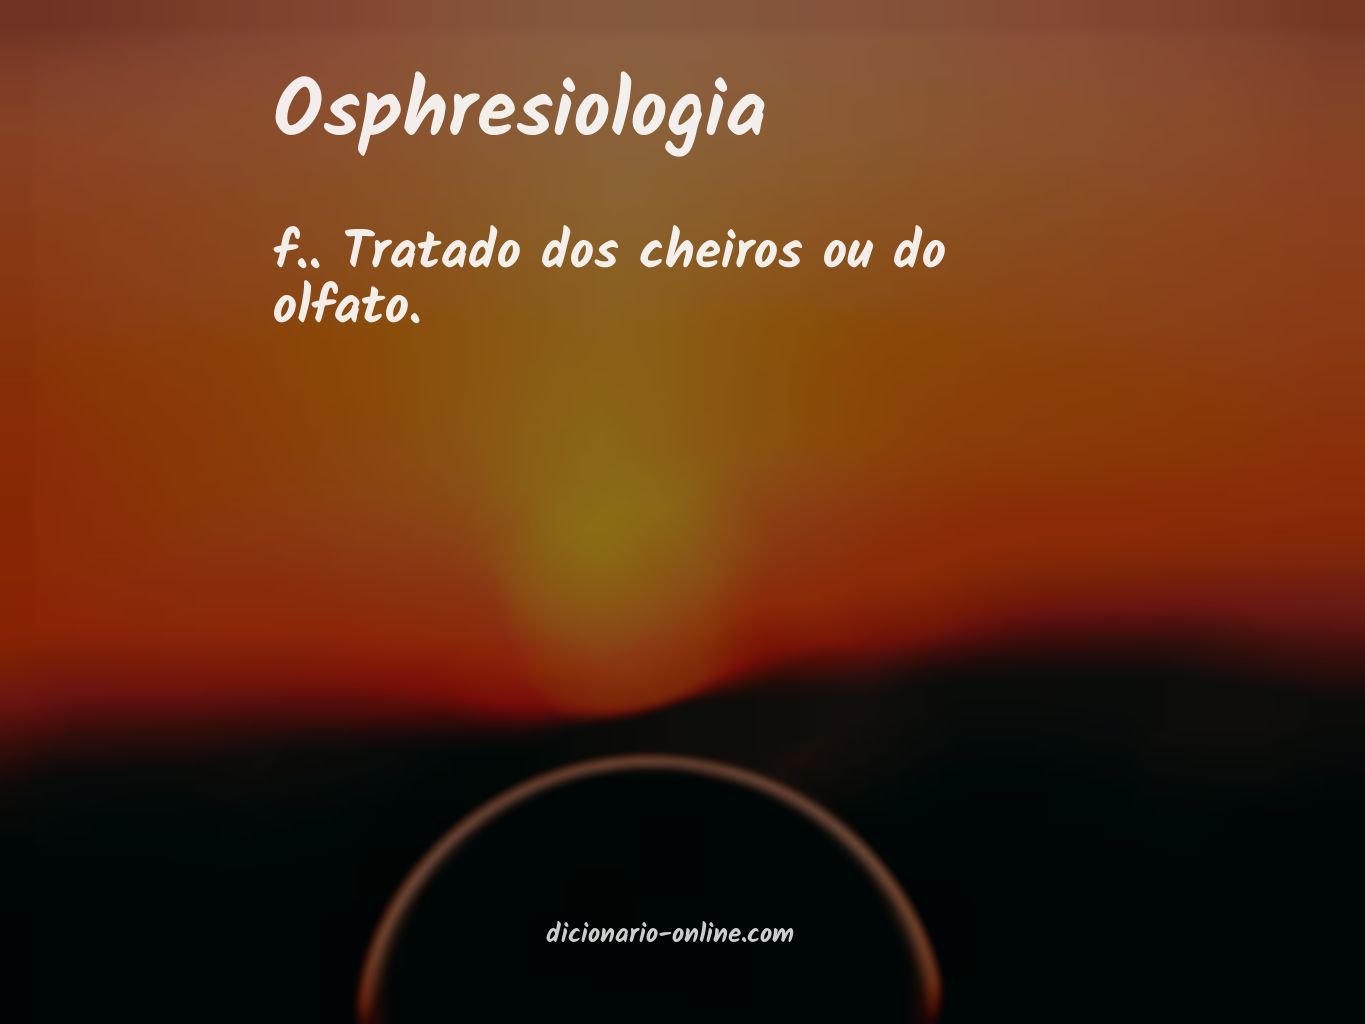 Significado de osphresiologia